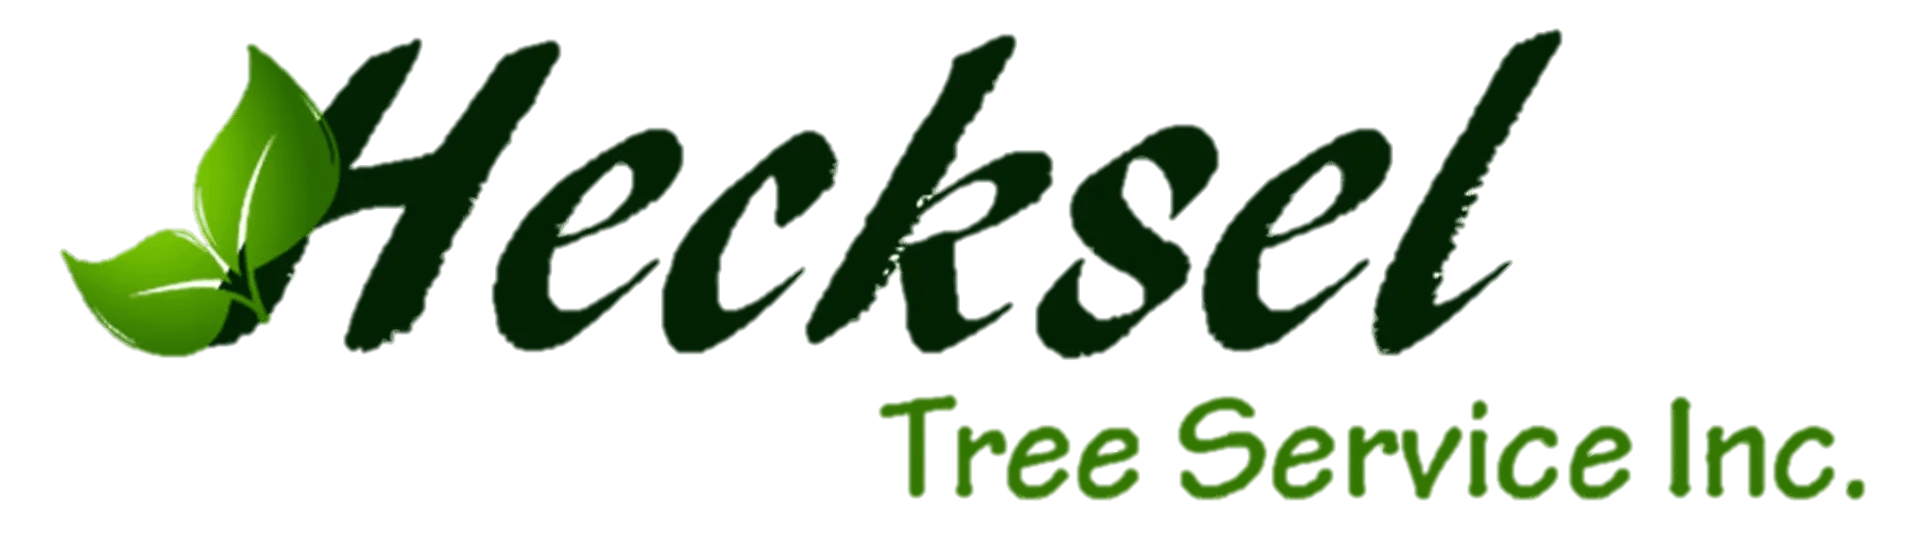 Hecksel Tree Removal Muskegon